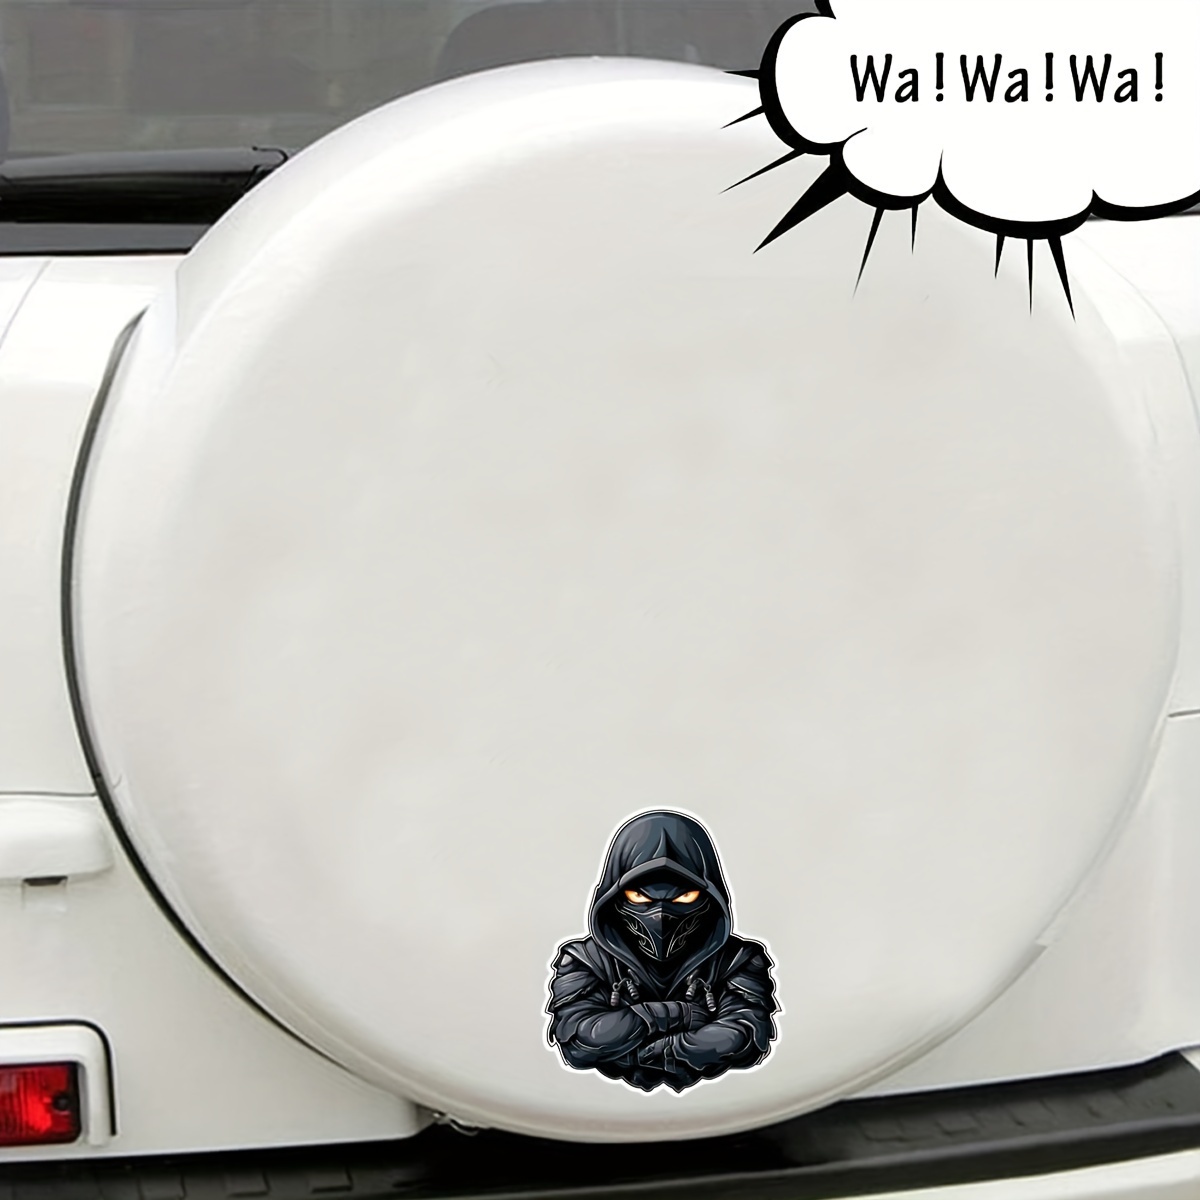 

1pc Black Ninja Sticker Souvenir Window Decal Vinyl For Cars Van Trucks Walls Laptop Doors Windows